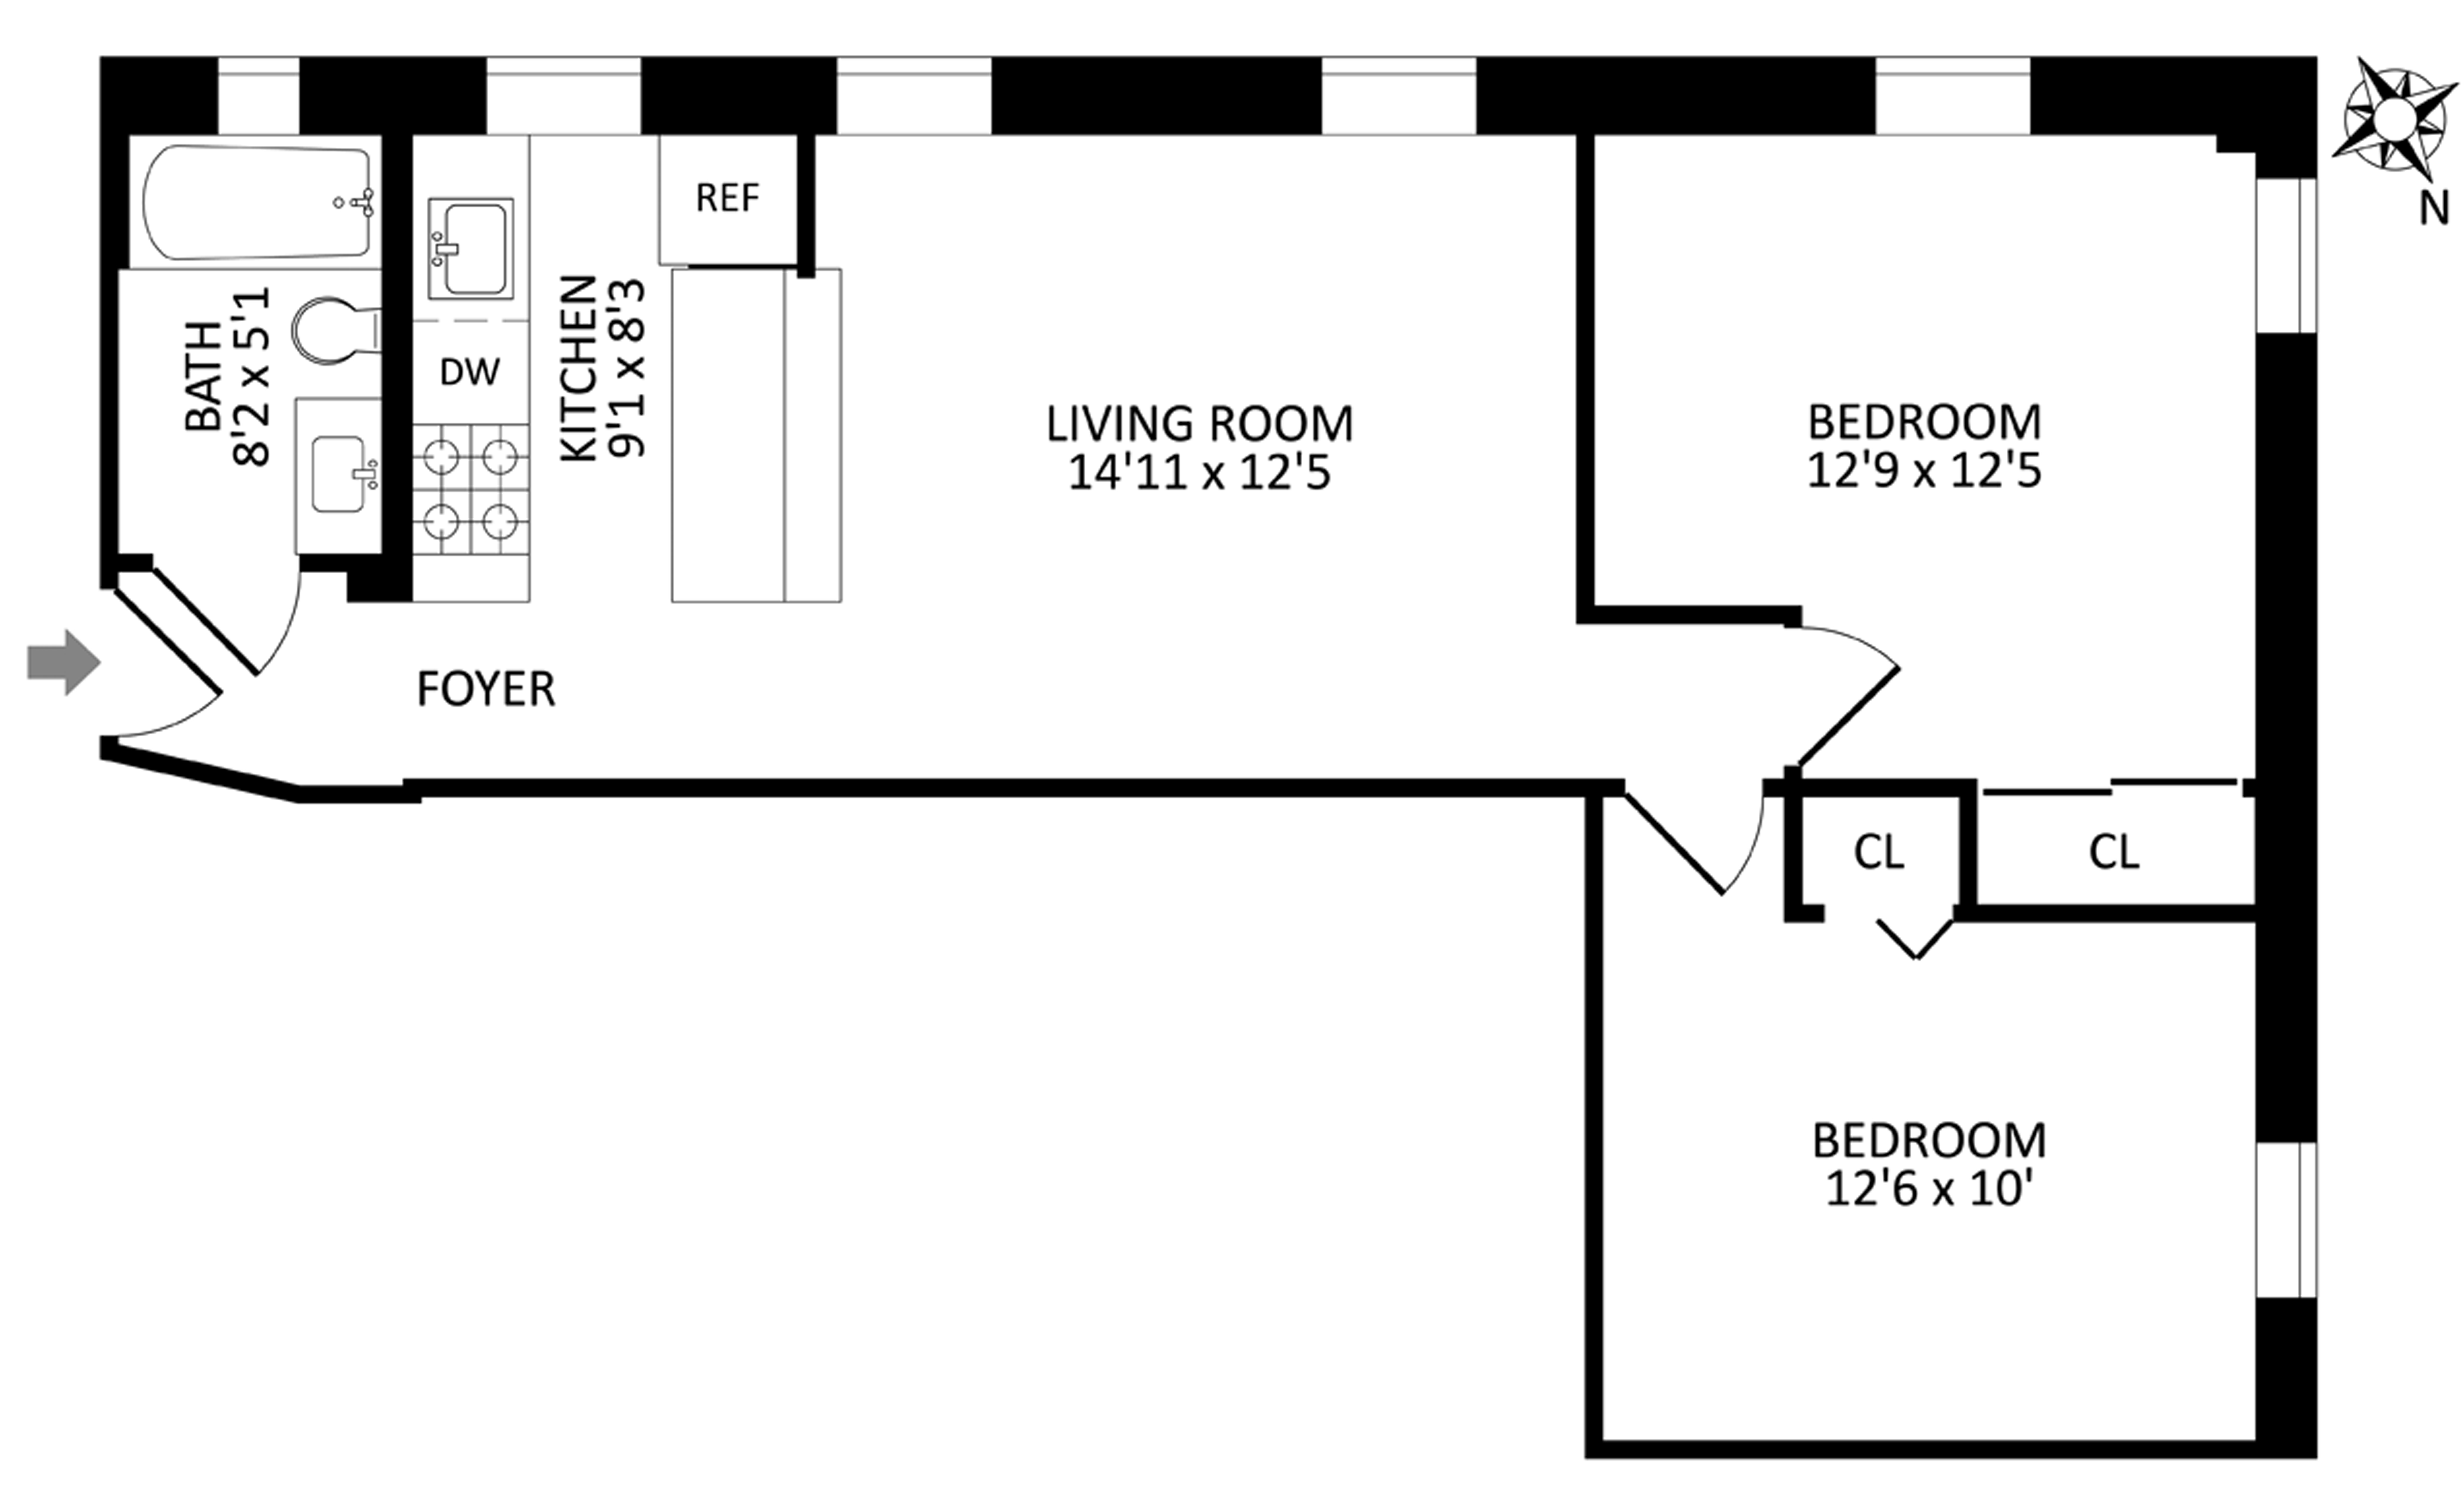 Floorplan for 186 Prospect Park West